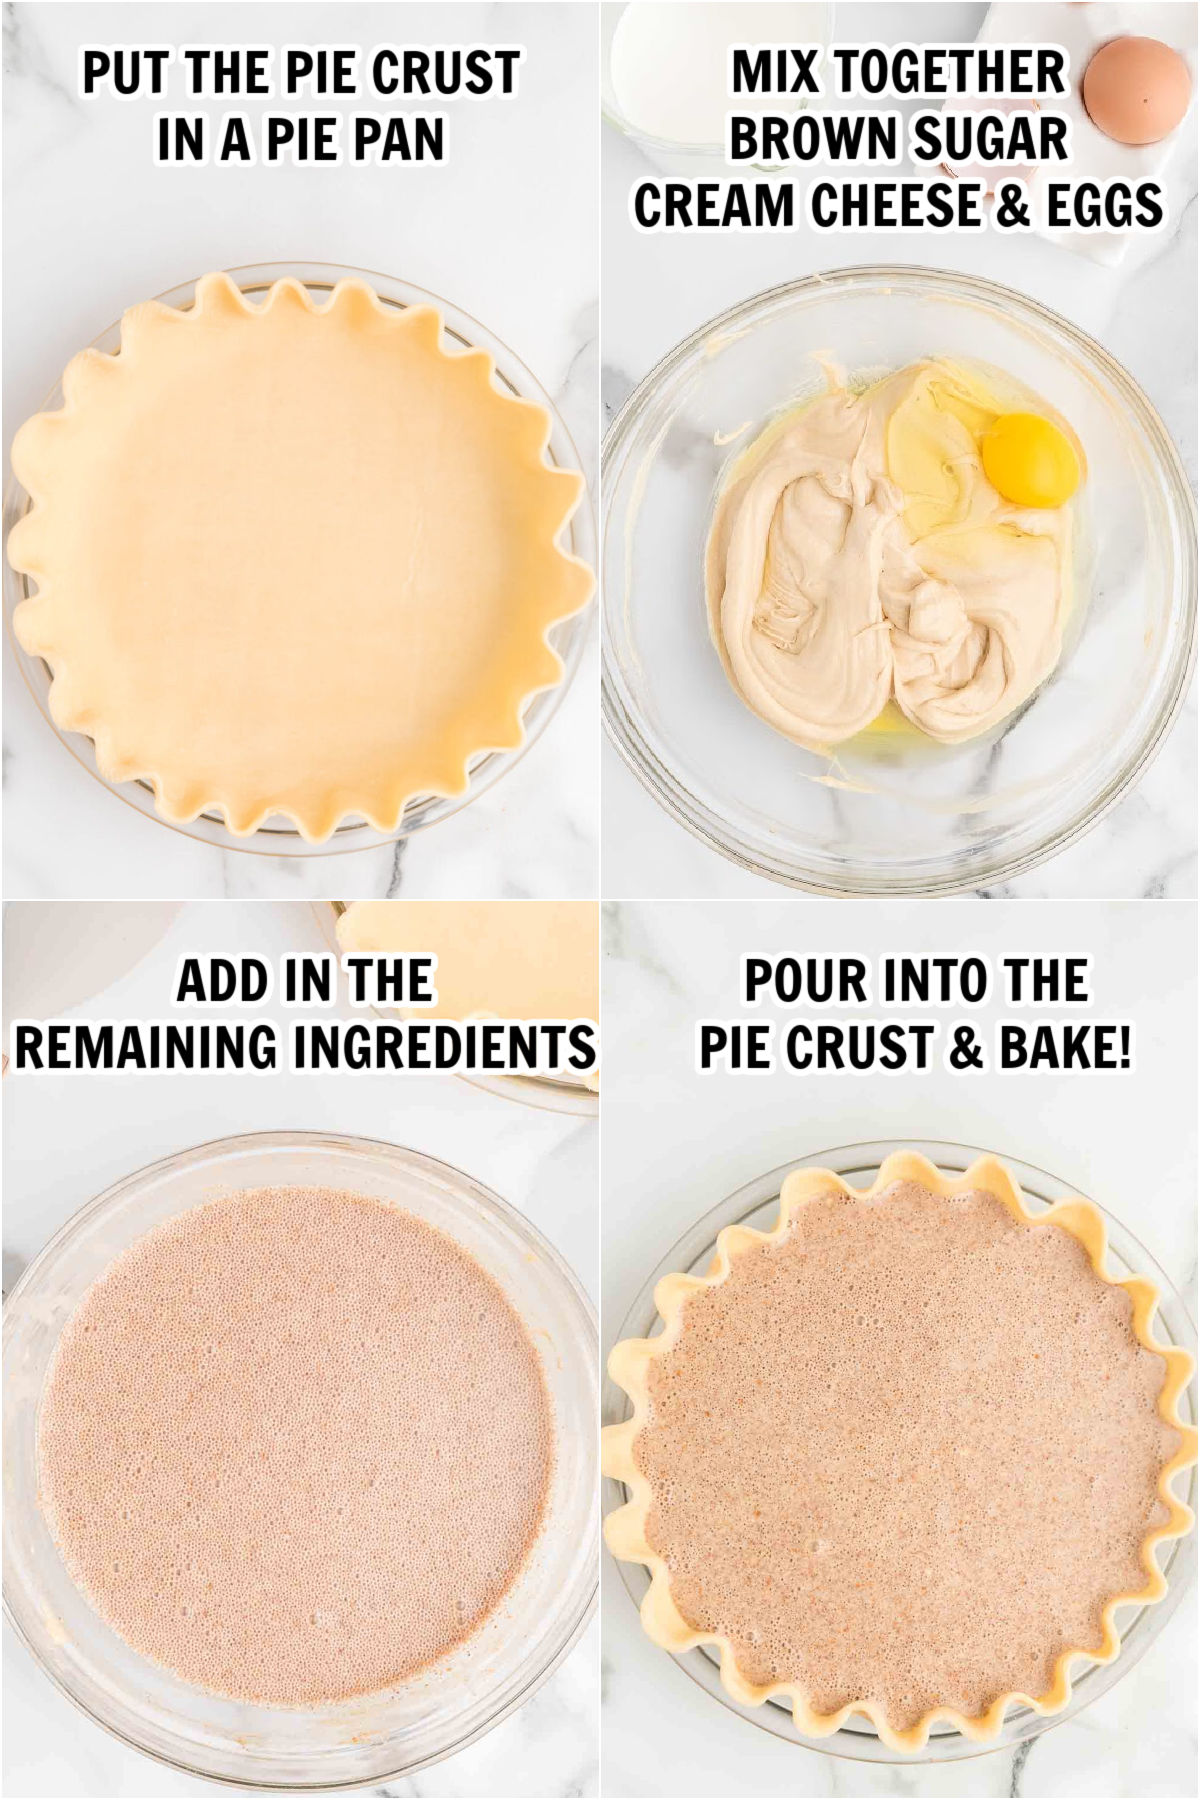 The process of making cinnamon pie